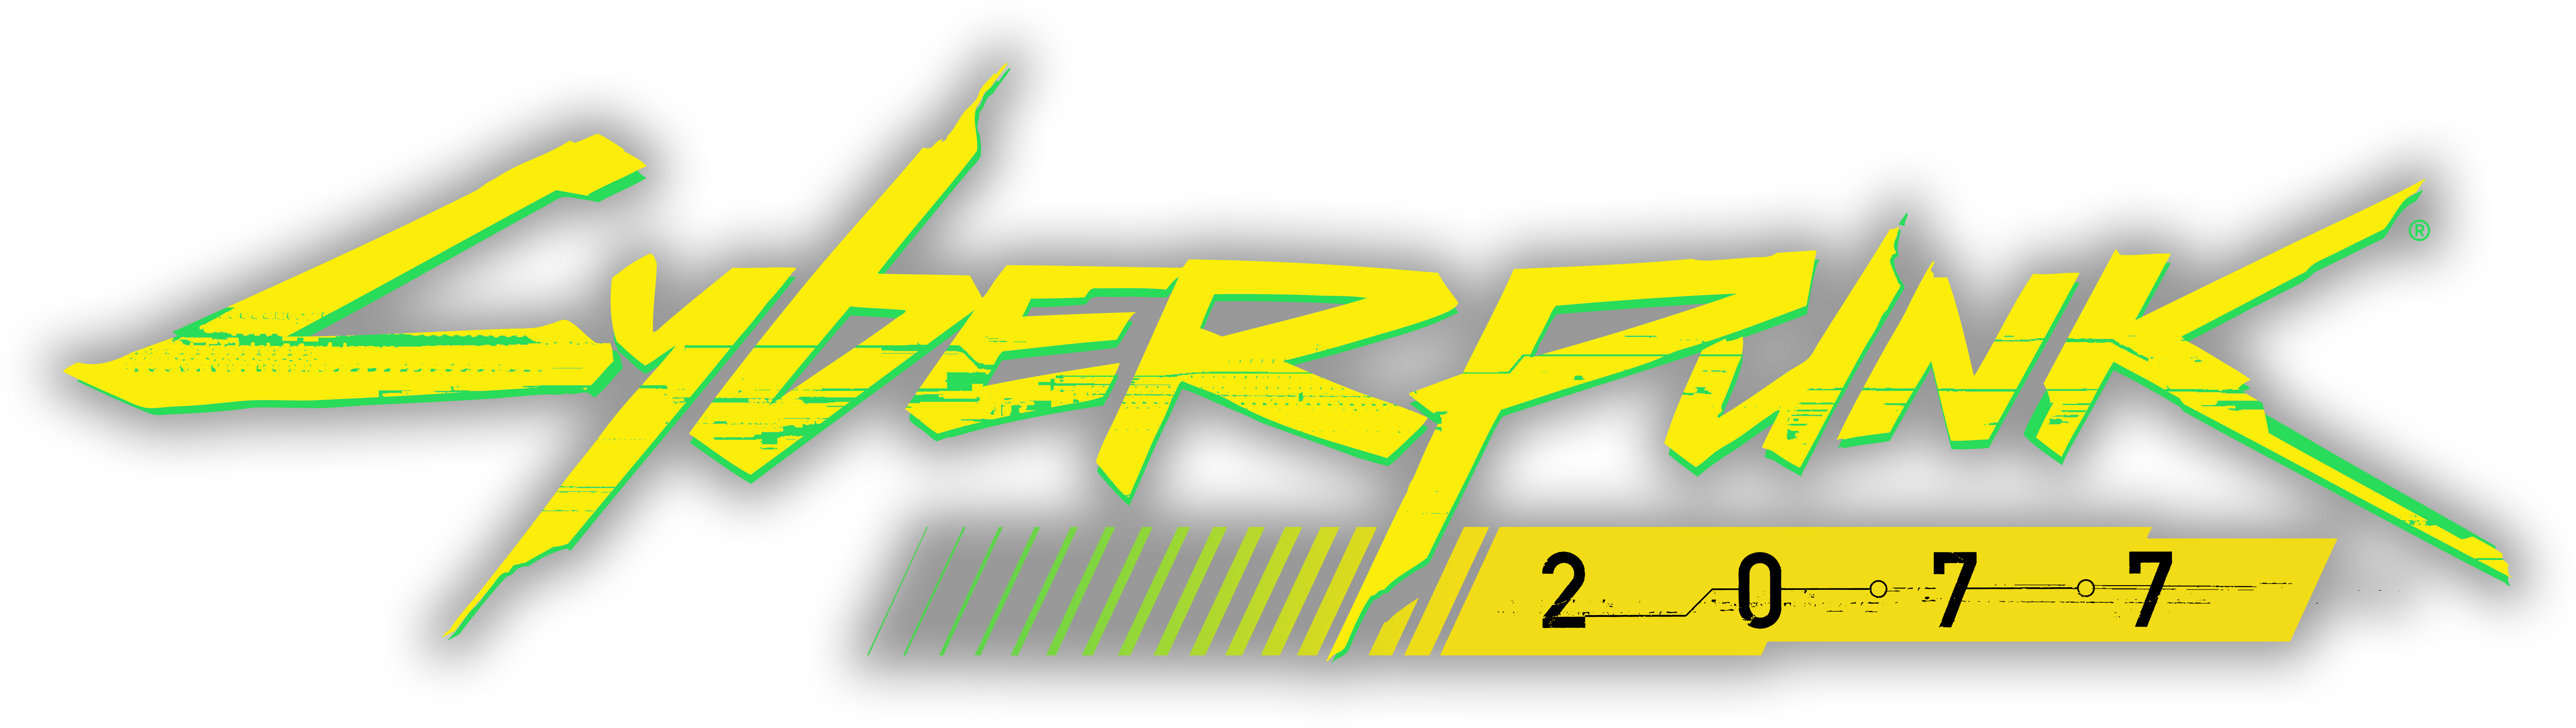 Cyberpunk logo font фото 95